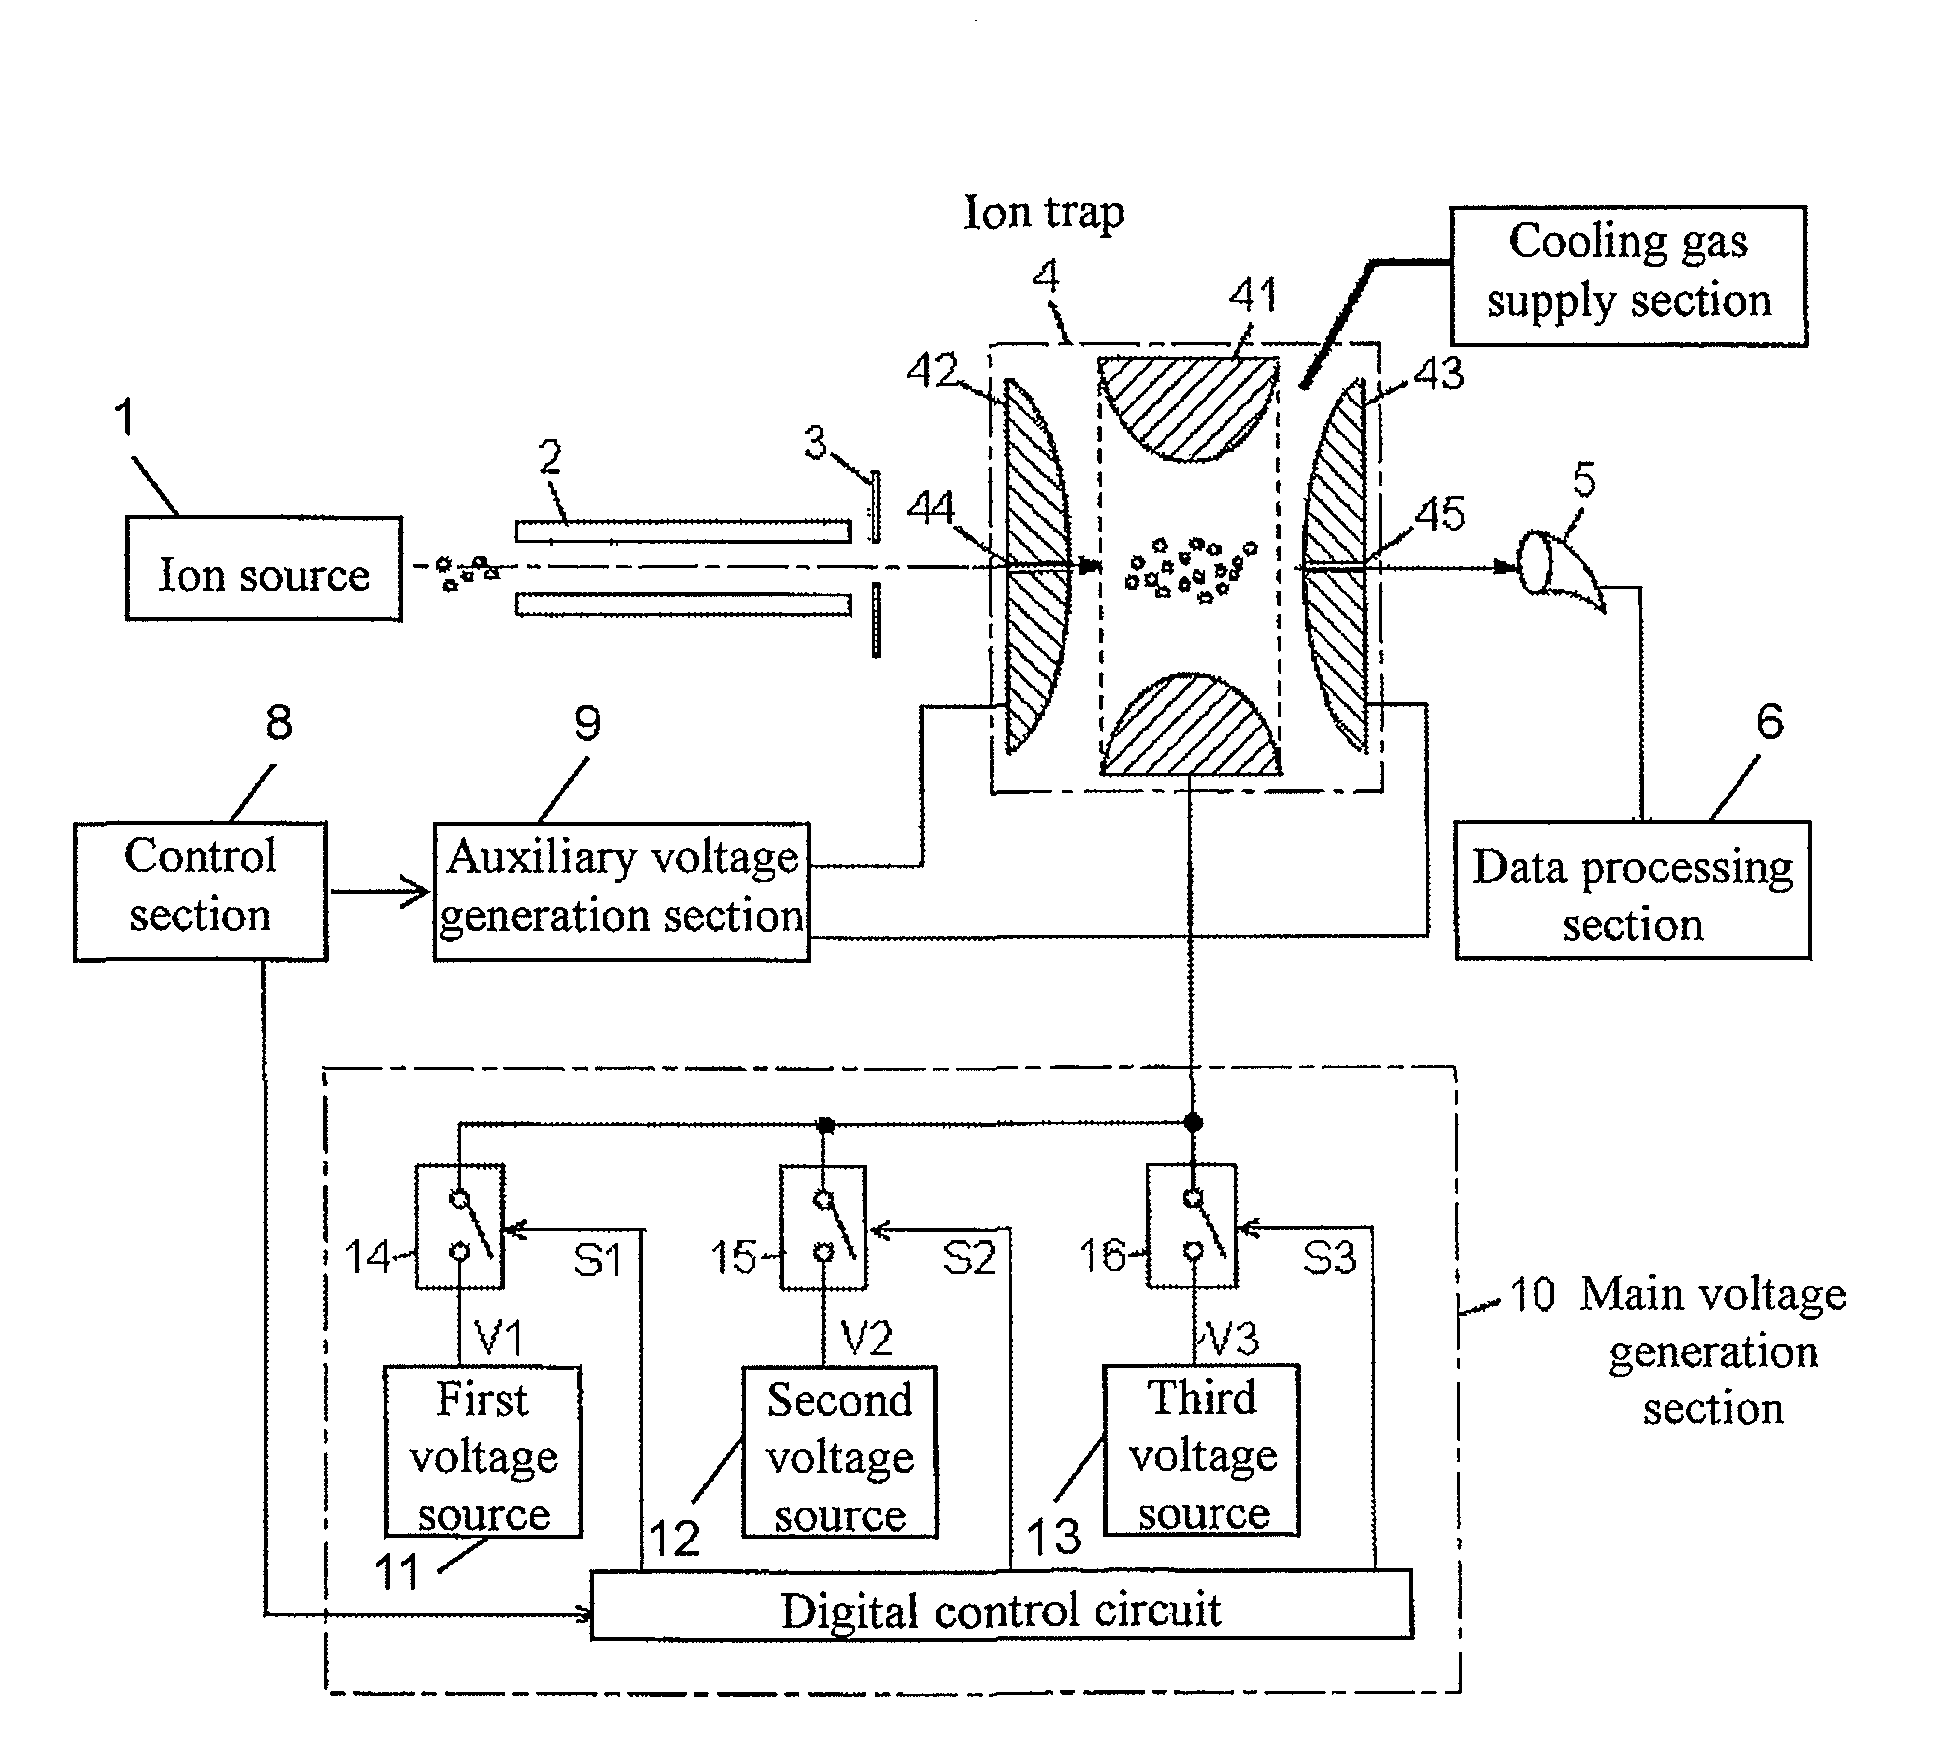 Ion trap mass spectrometer